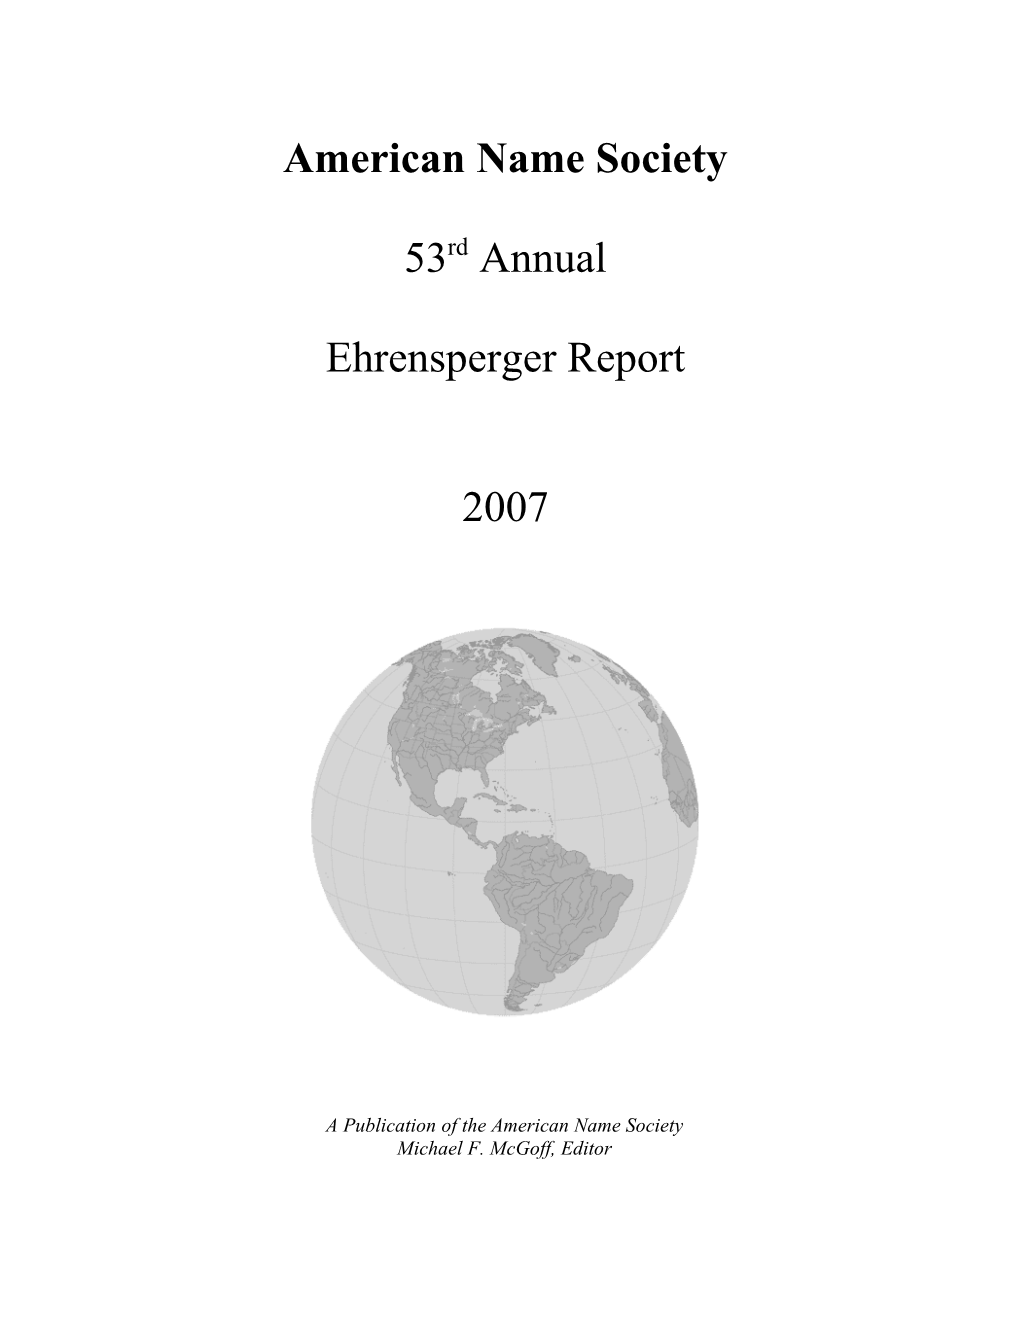 Ehrensperger Report 2007